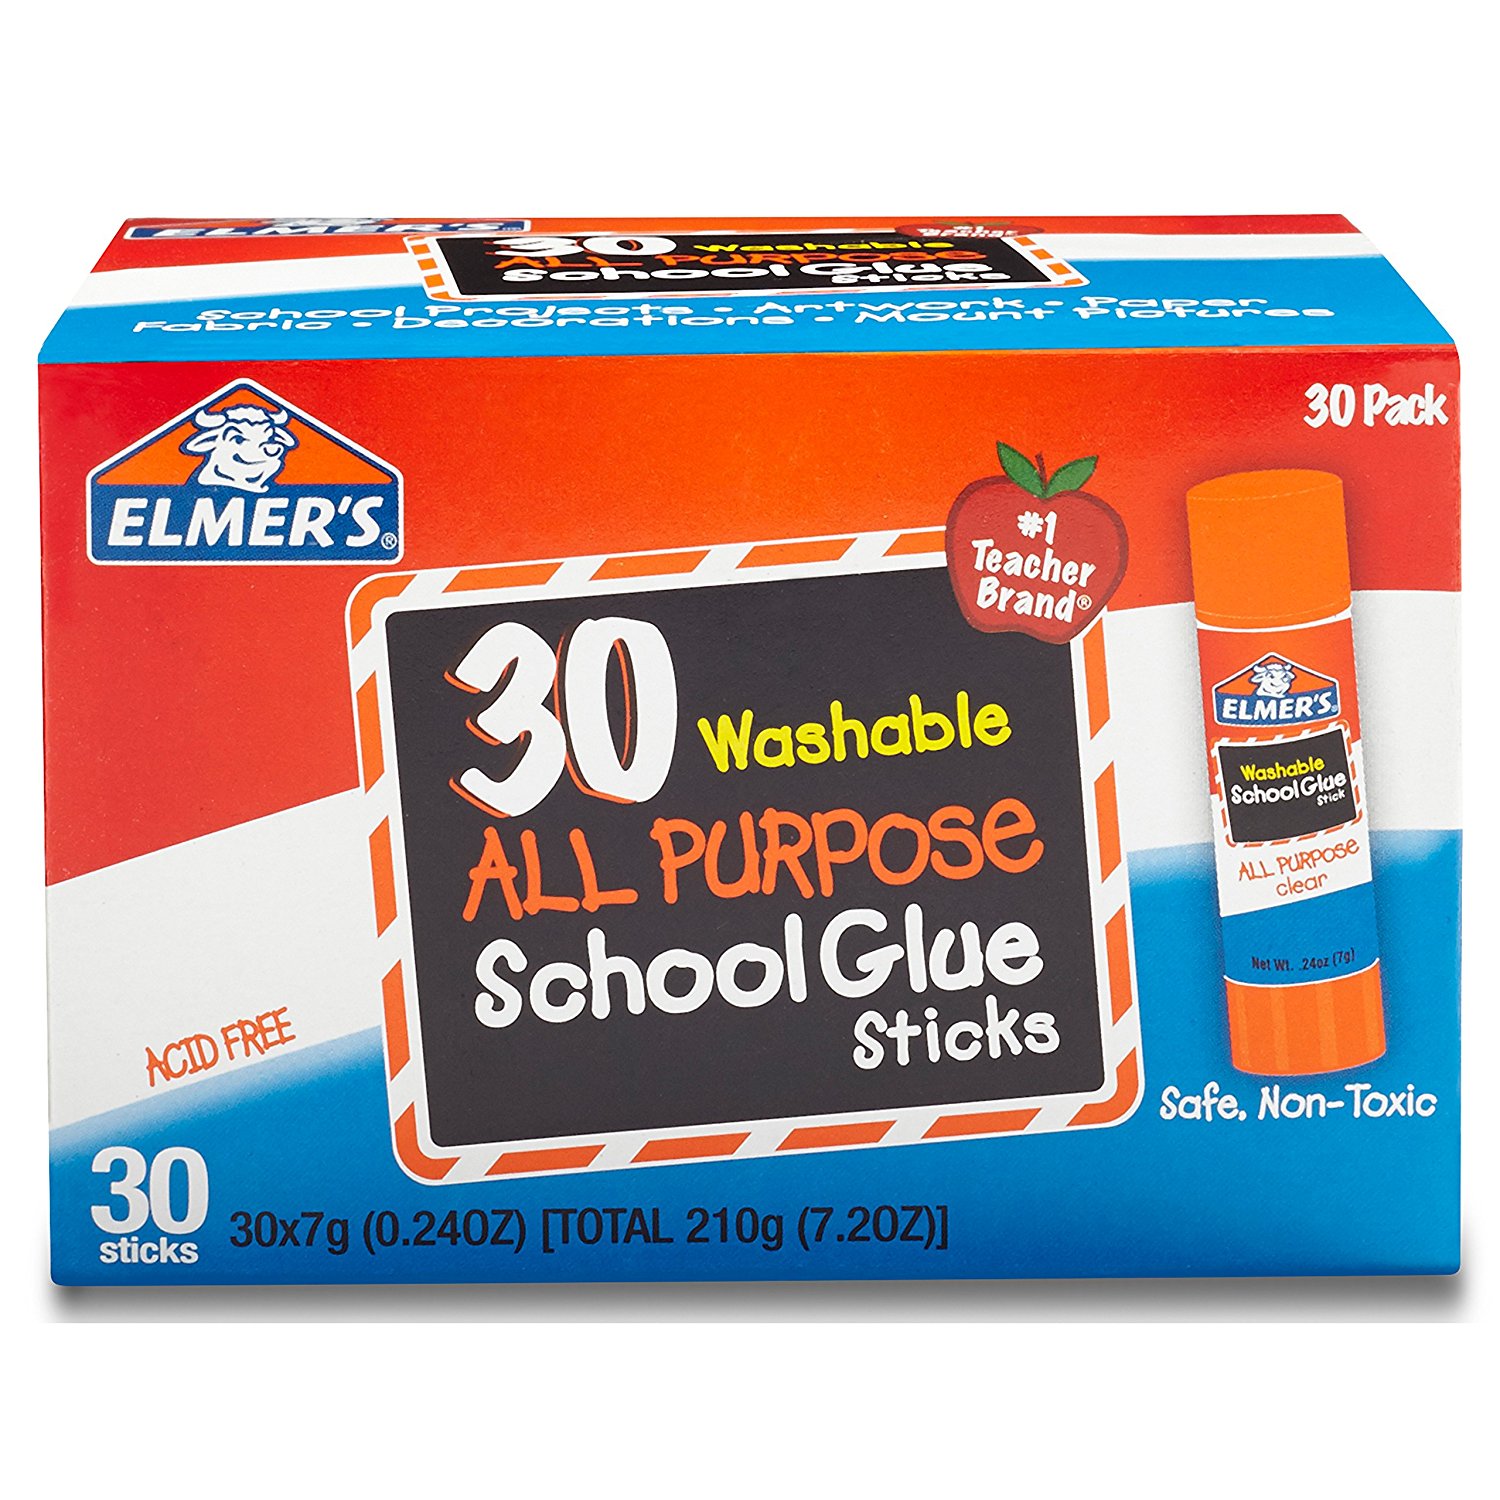 Elmer’s All Purpose School Glue Sticks, Washable, 30 Pack – Just $7.88!